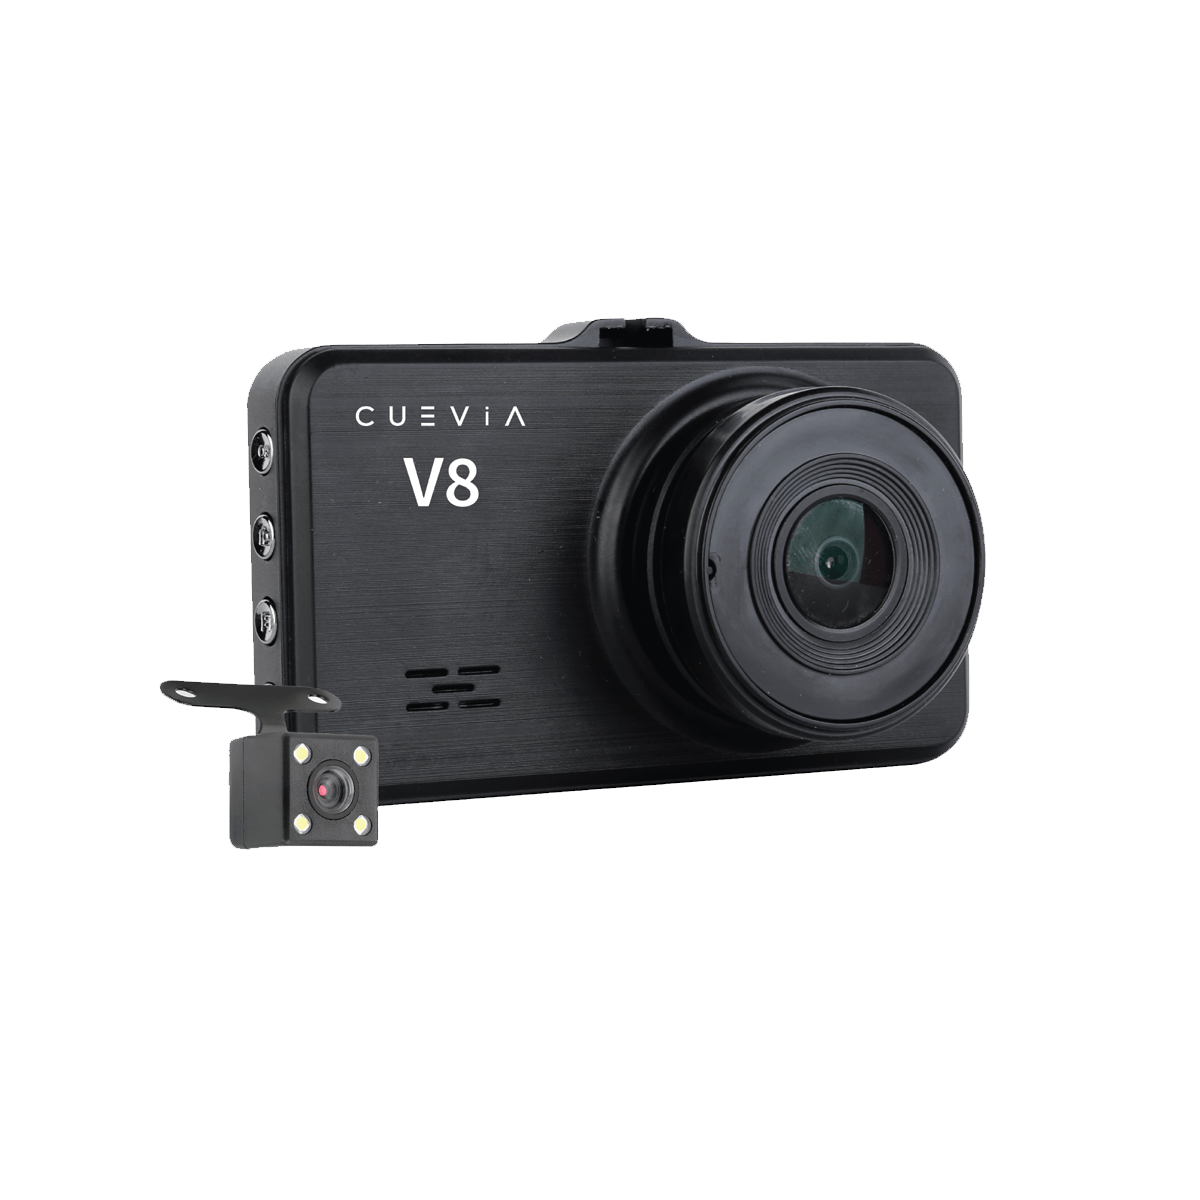 Cuevia V8 Dash Camera with Dual Channel Full HD 1080P